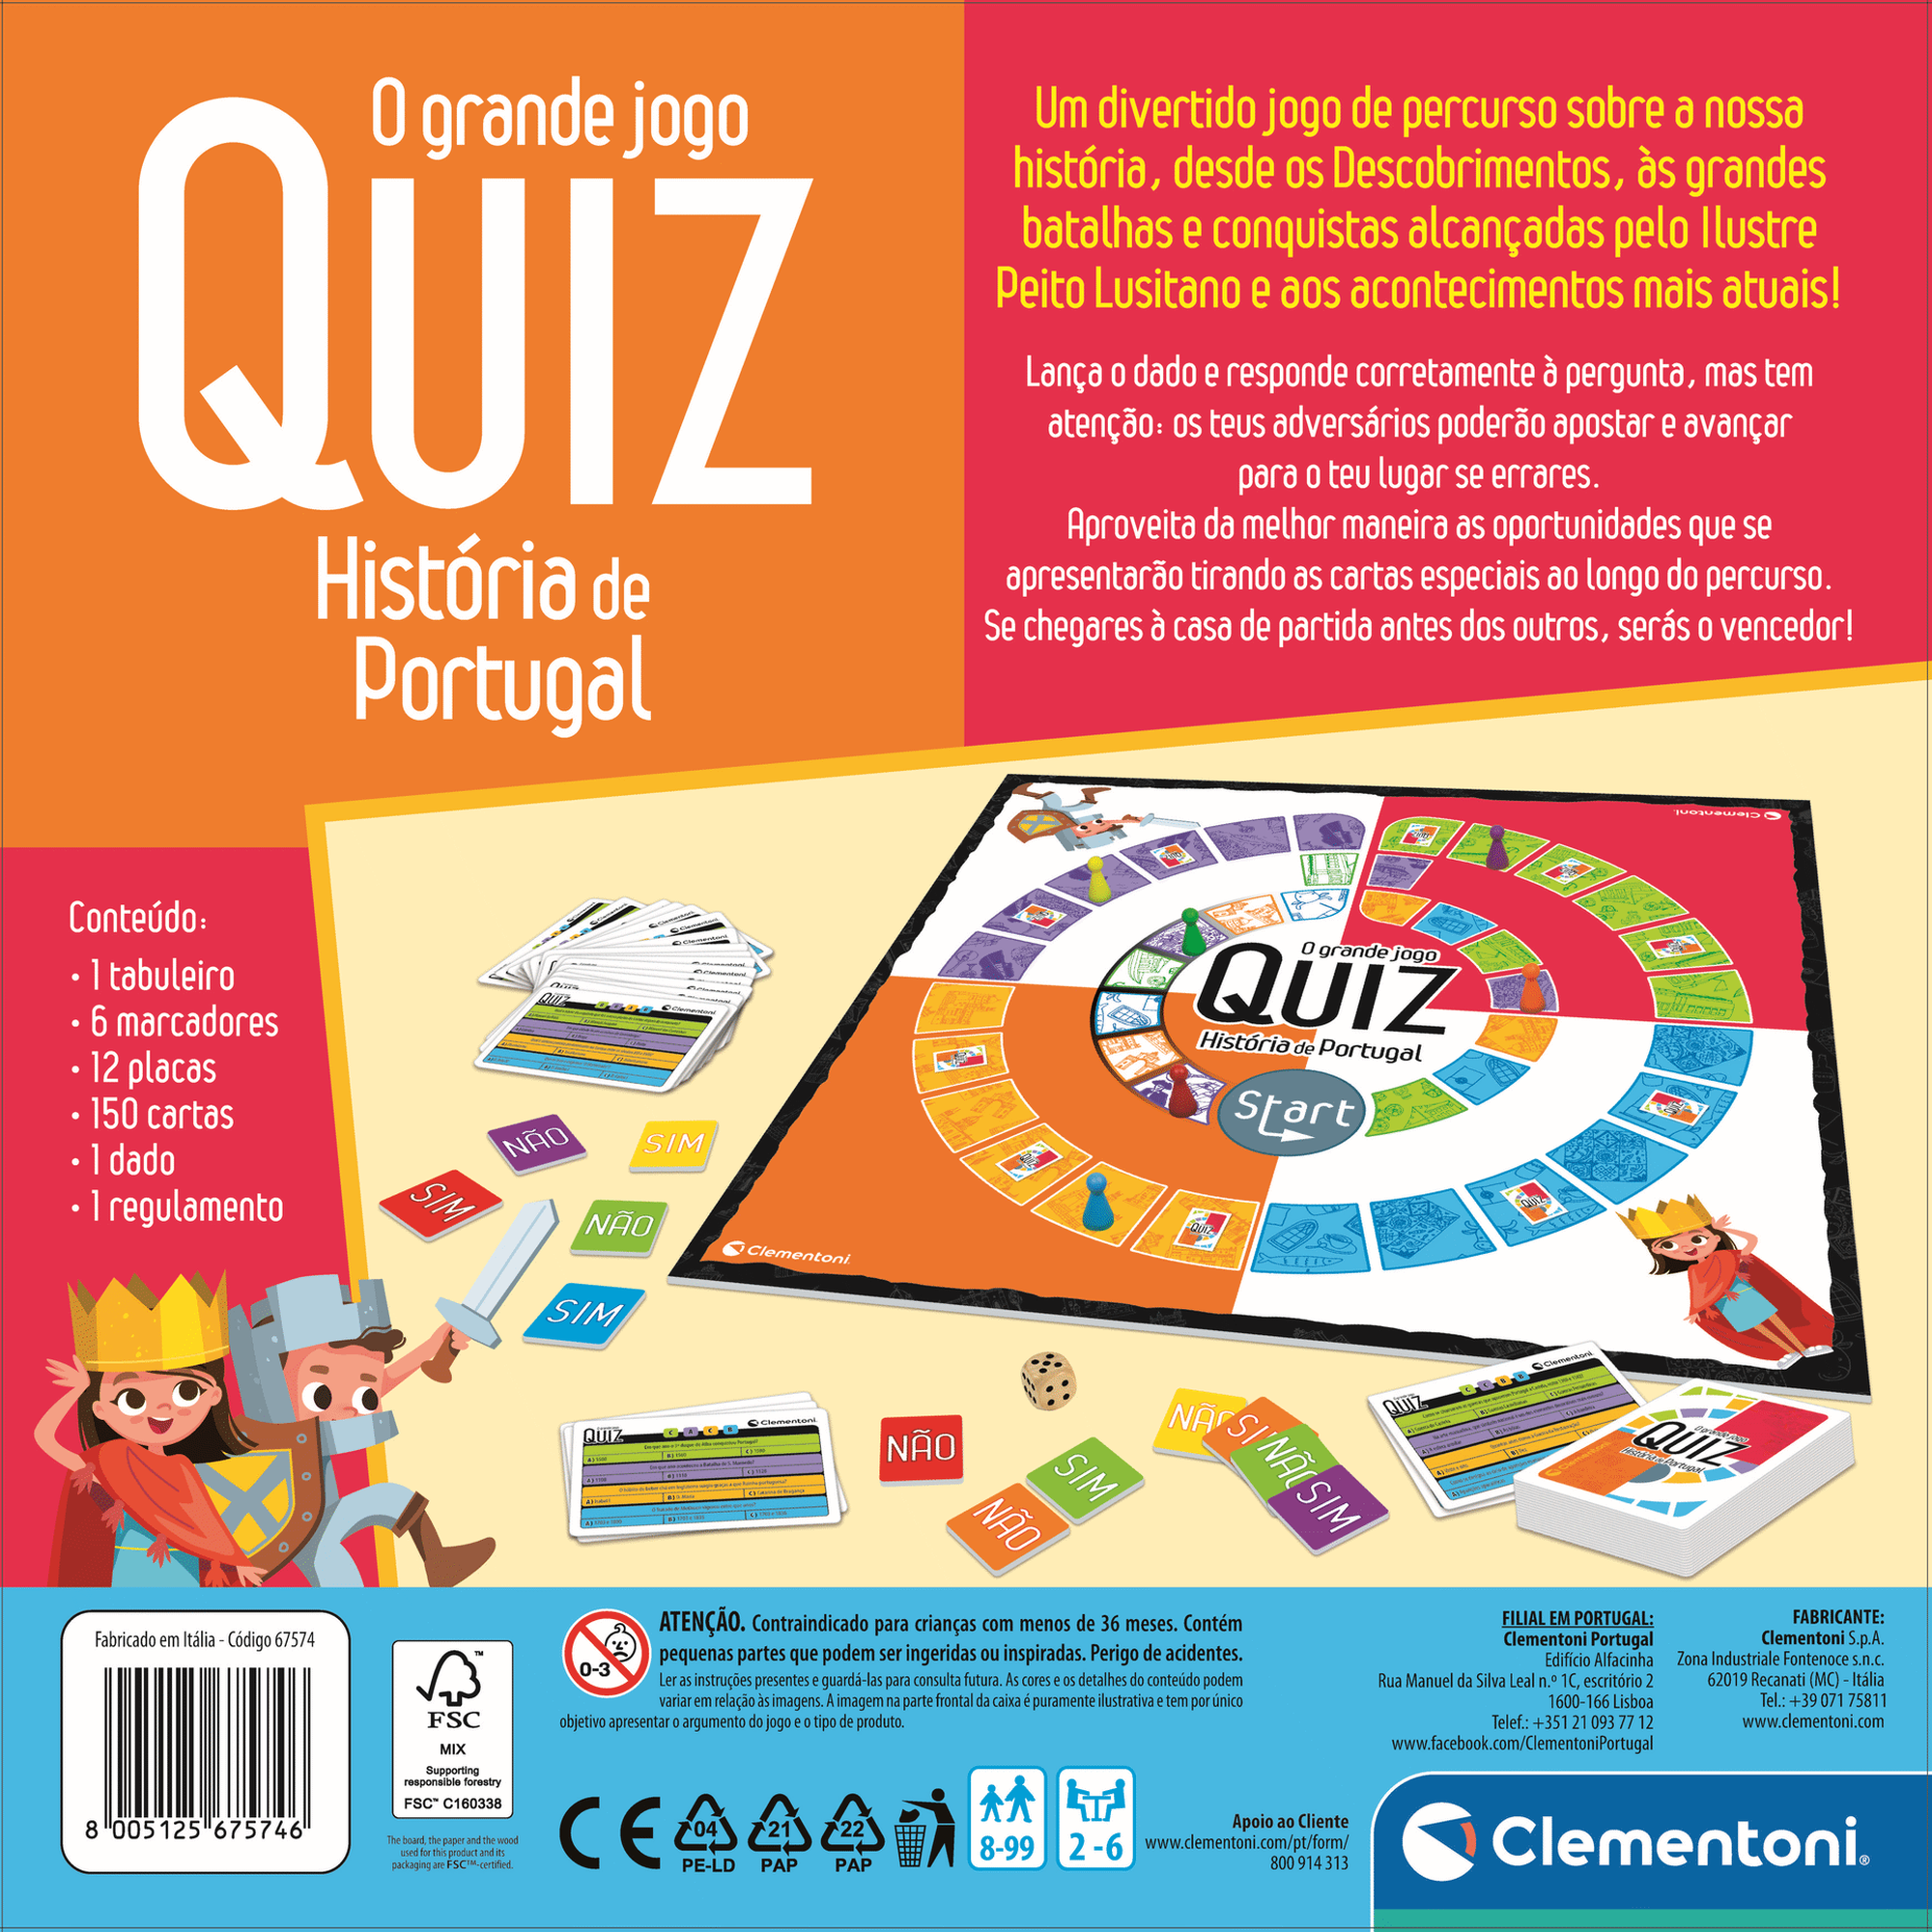 Jogo Desafio Quiz Descobrir Portugal 18220 Educa +7 anos